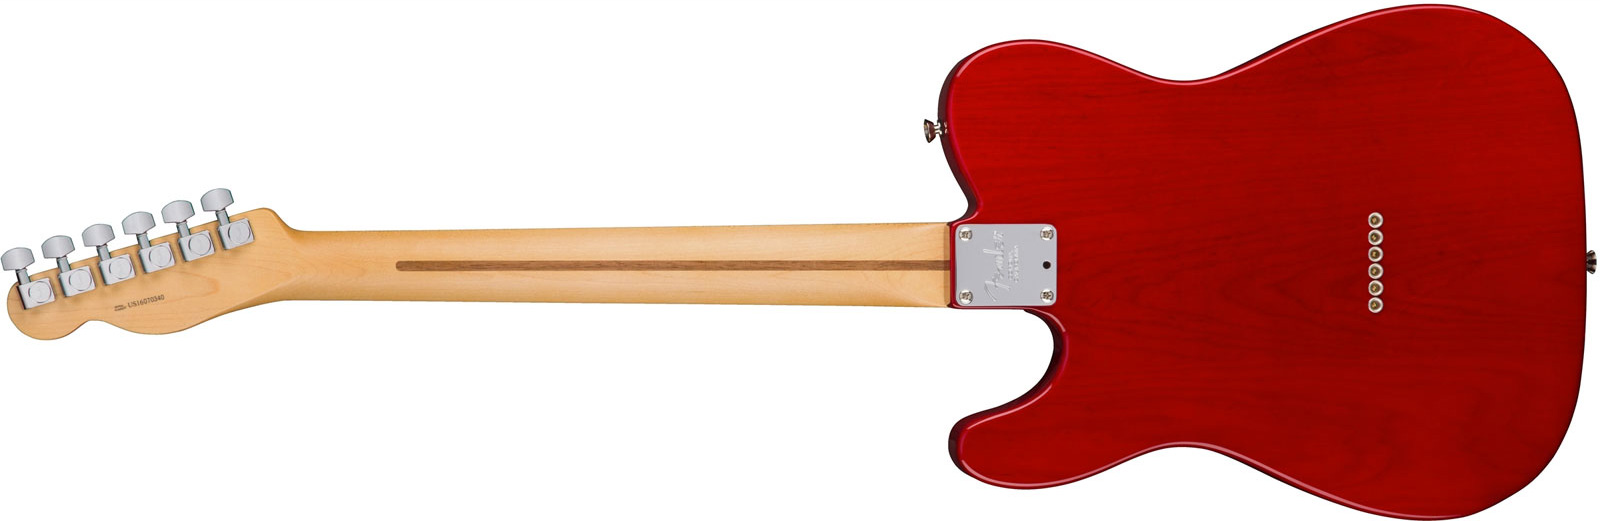 Fender Tele American Professional 2s Usa Rw - Crimson Red Transparent - Str shape electric guitar - Variation 1